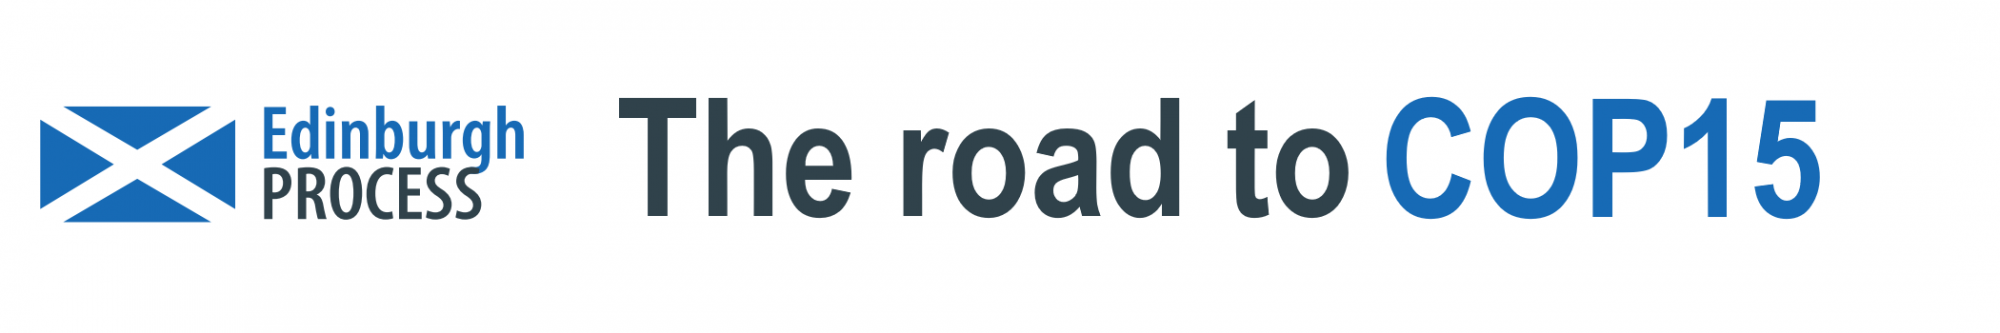 Edinburgh process logo and road to COP15 title